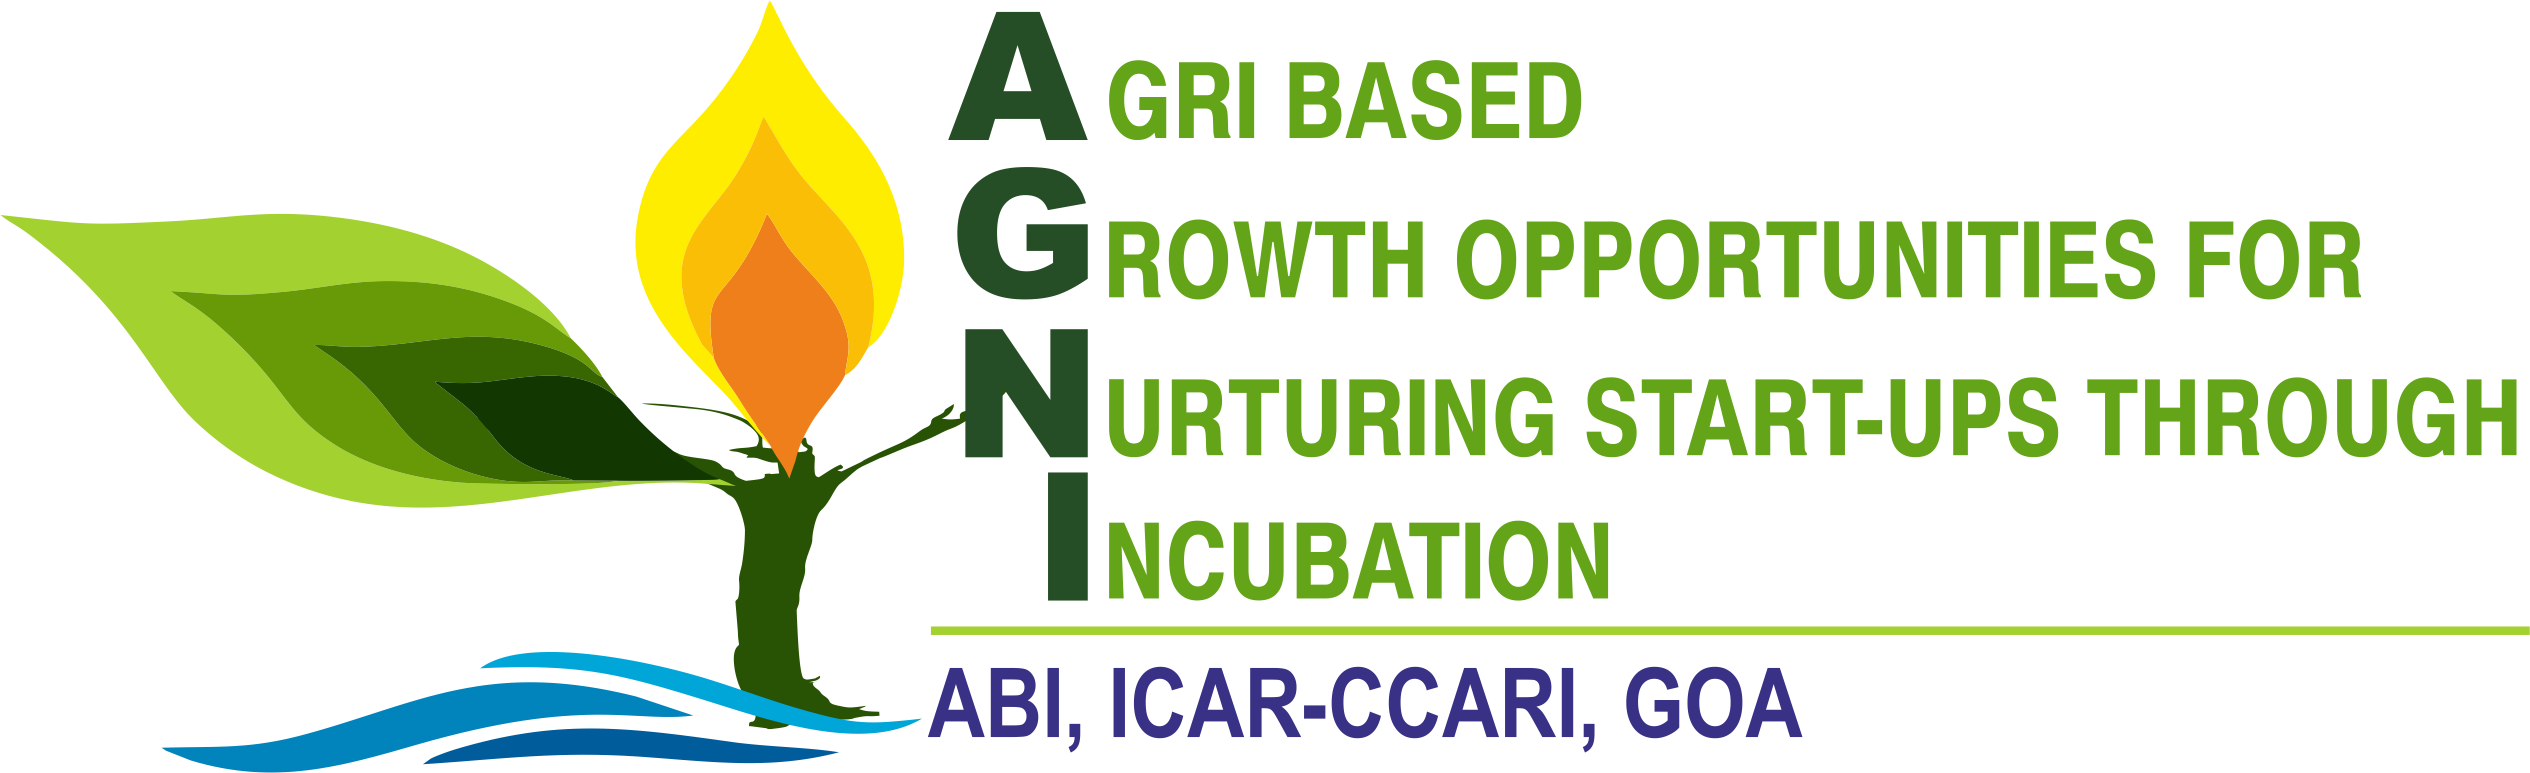 AGNI_logo